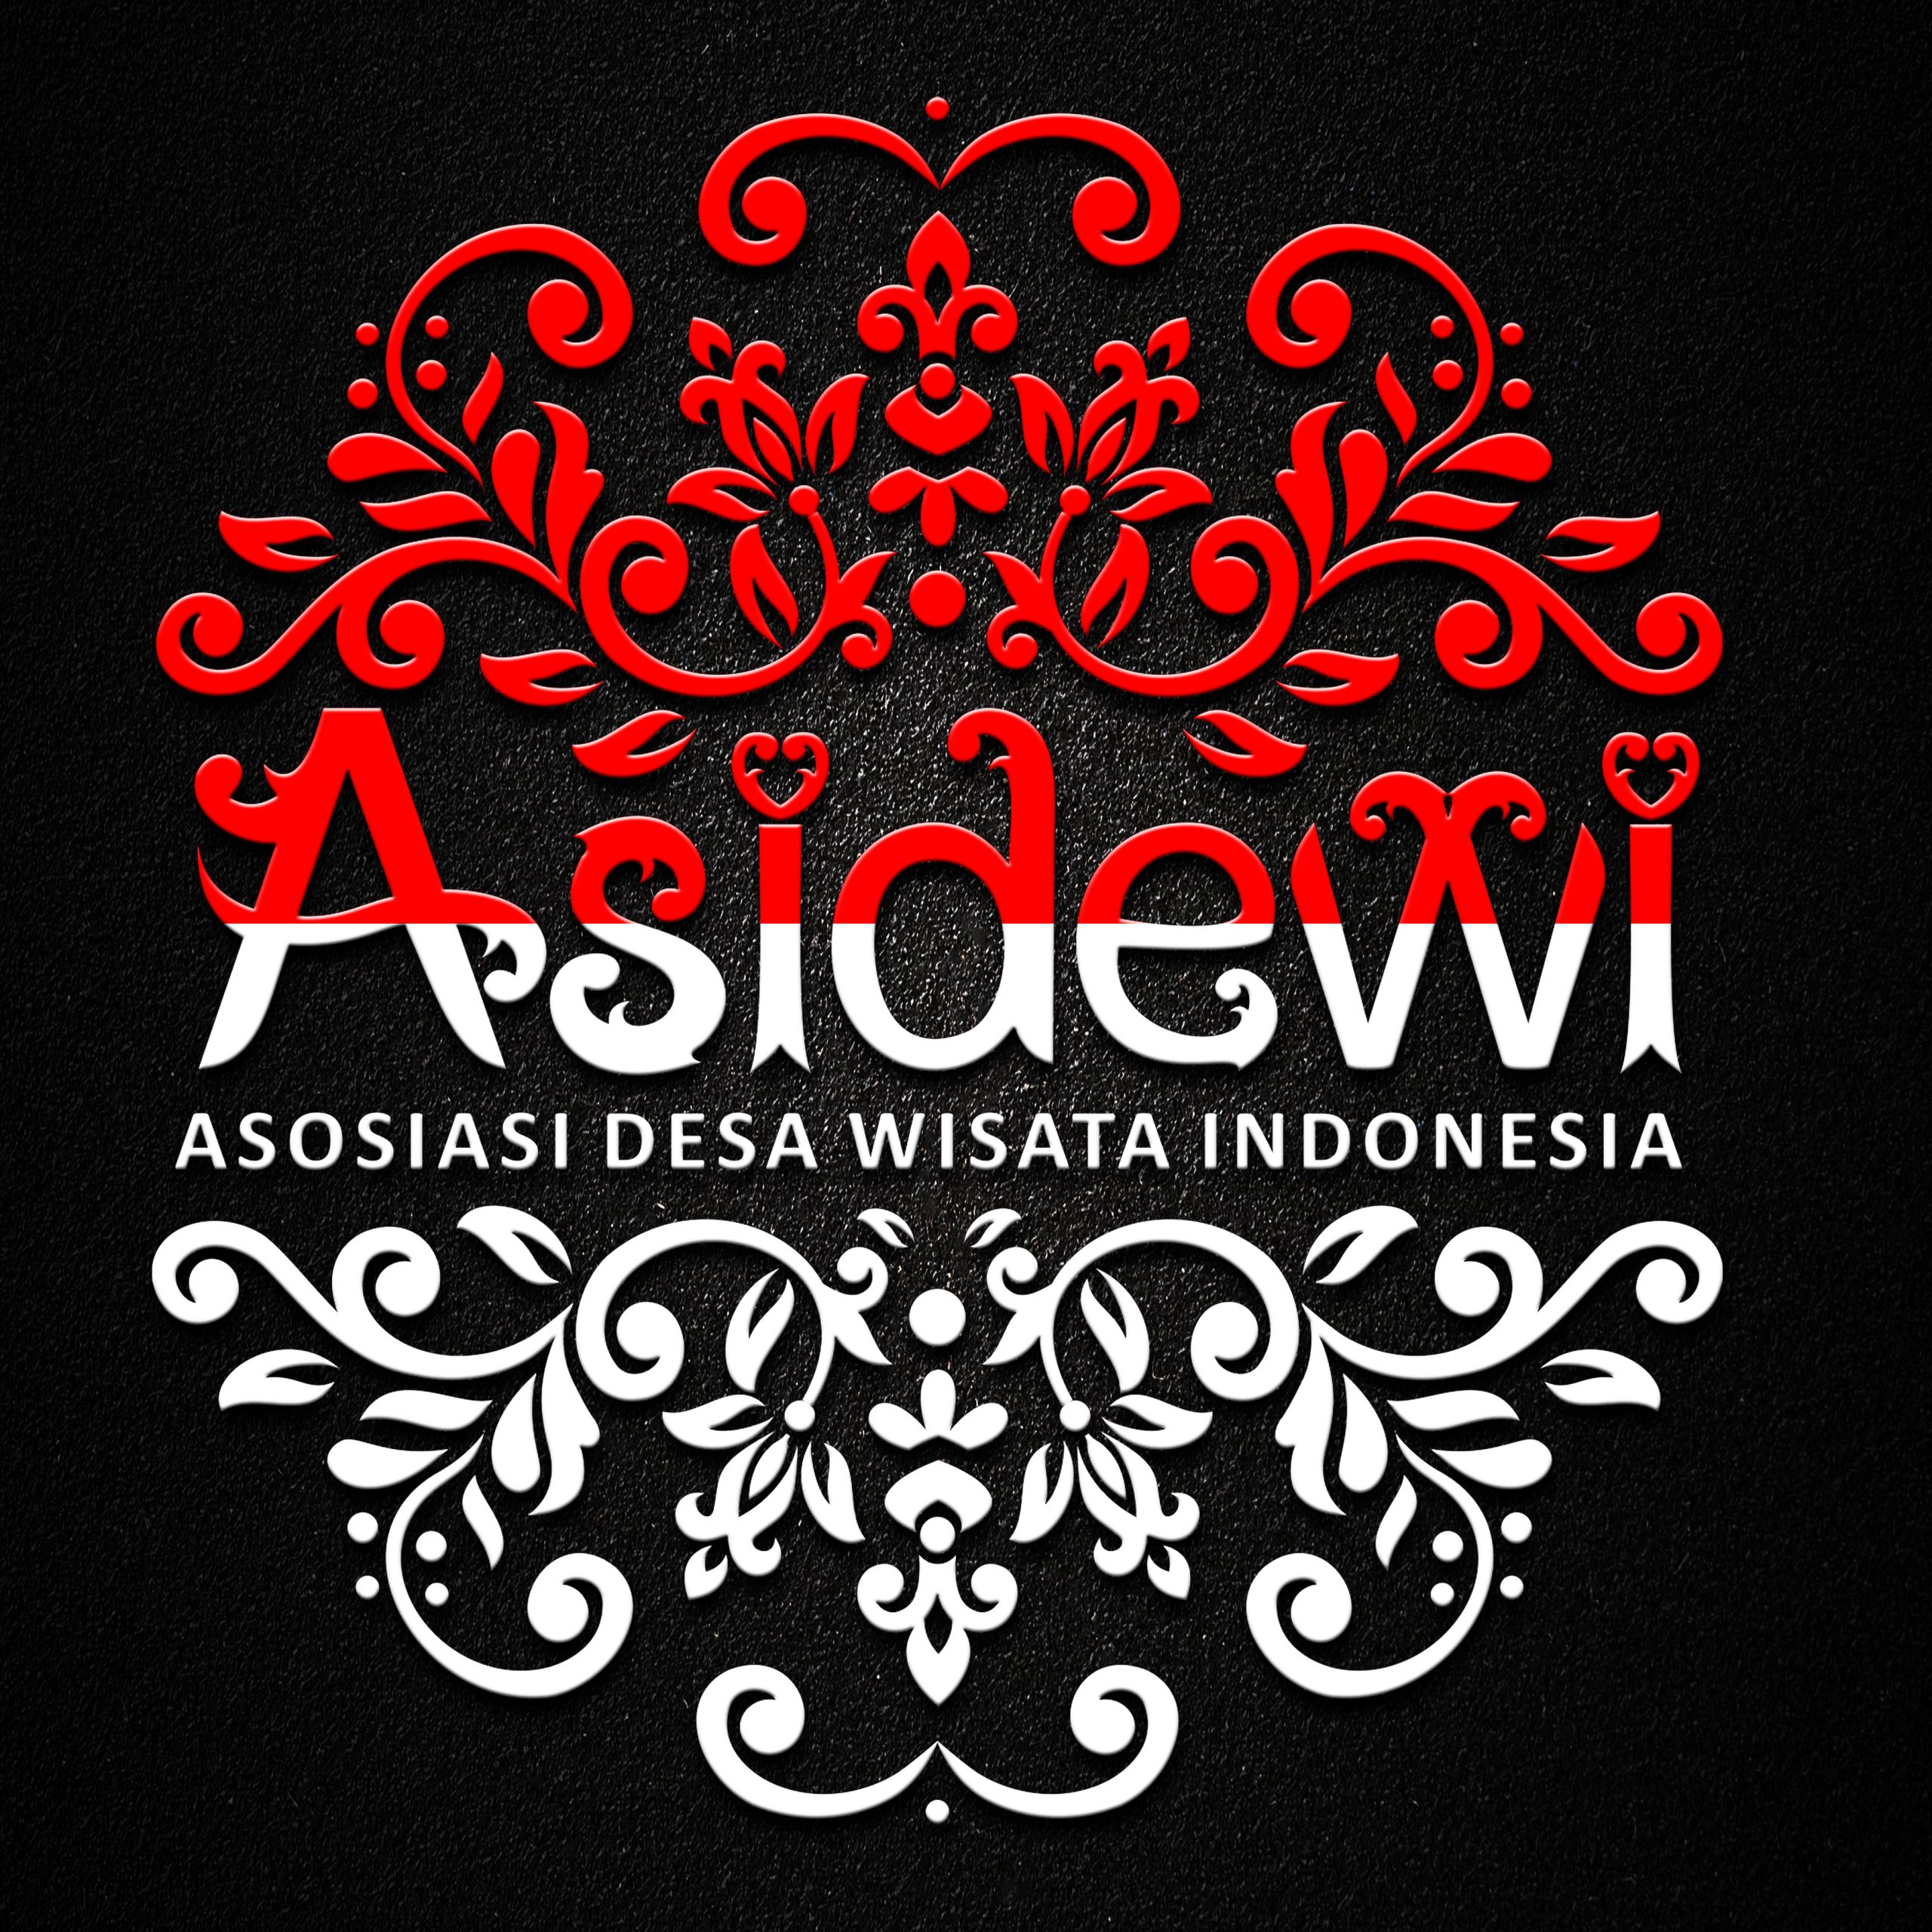 asidewi_merah_putih_copy1-1